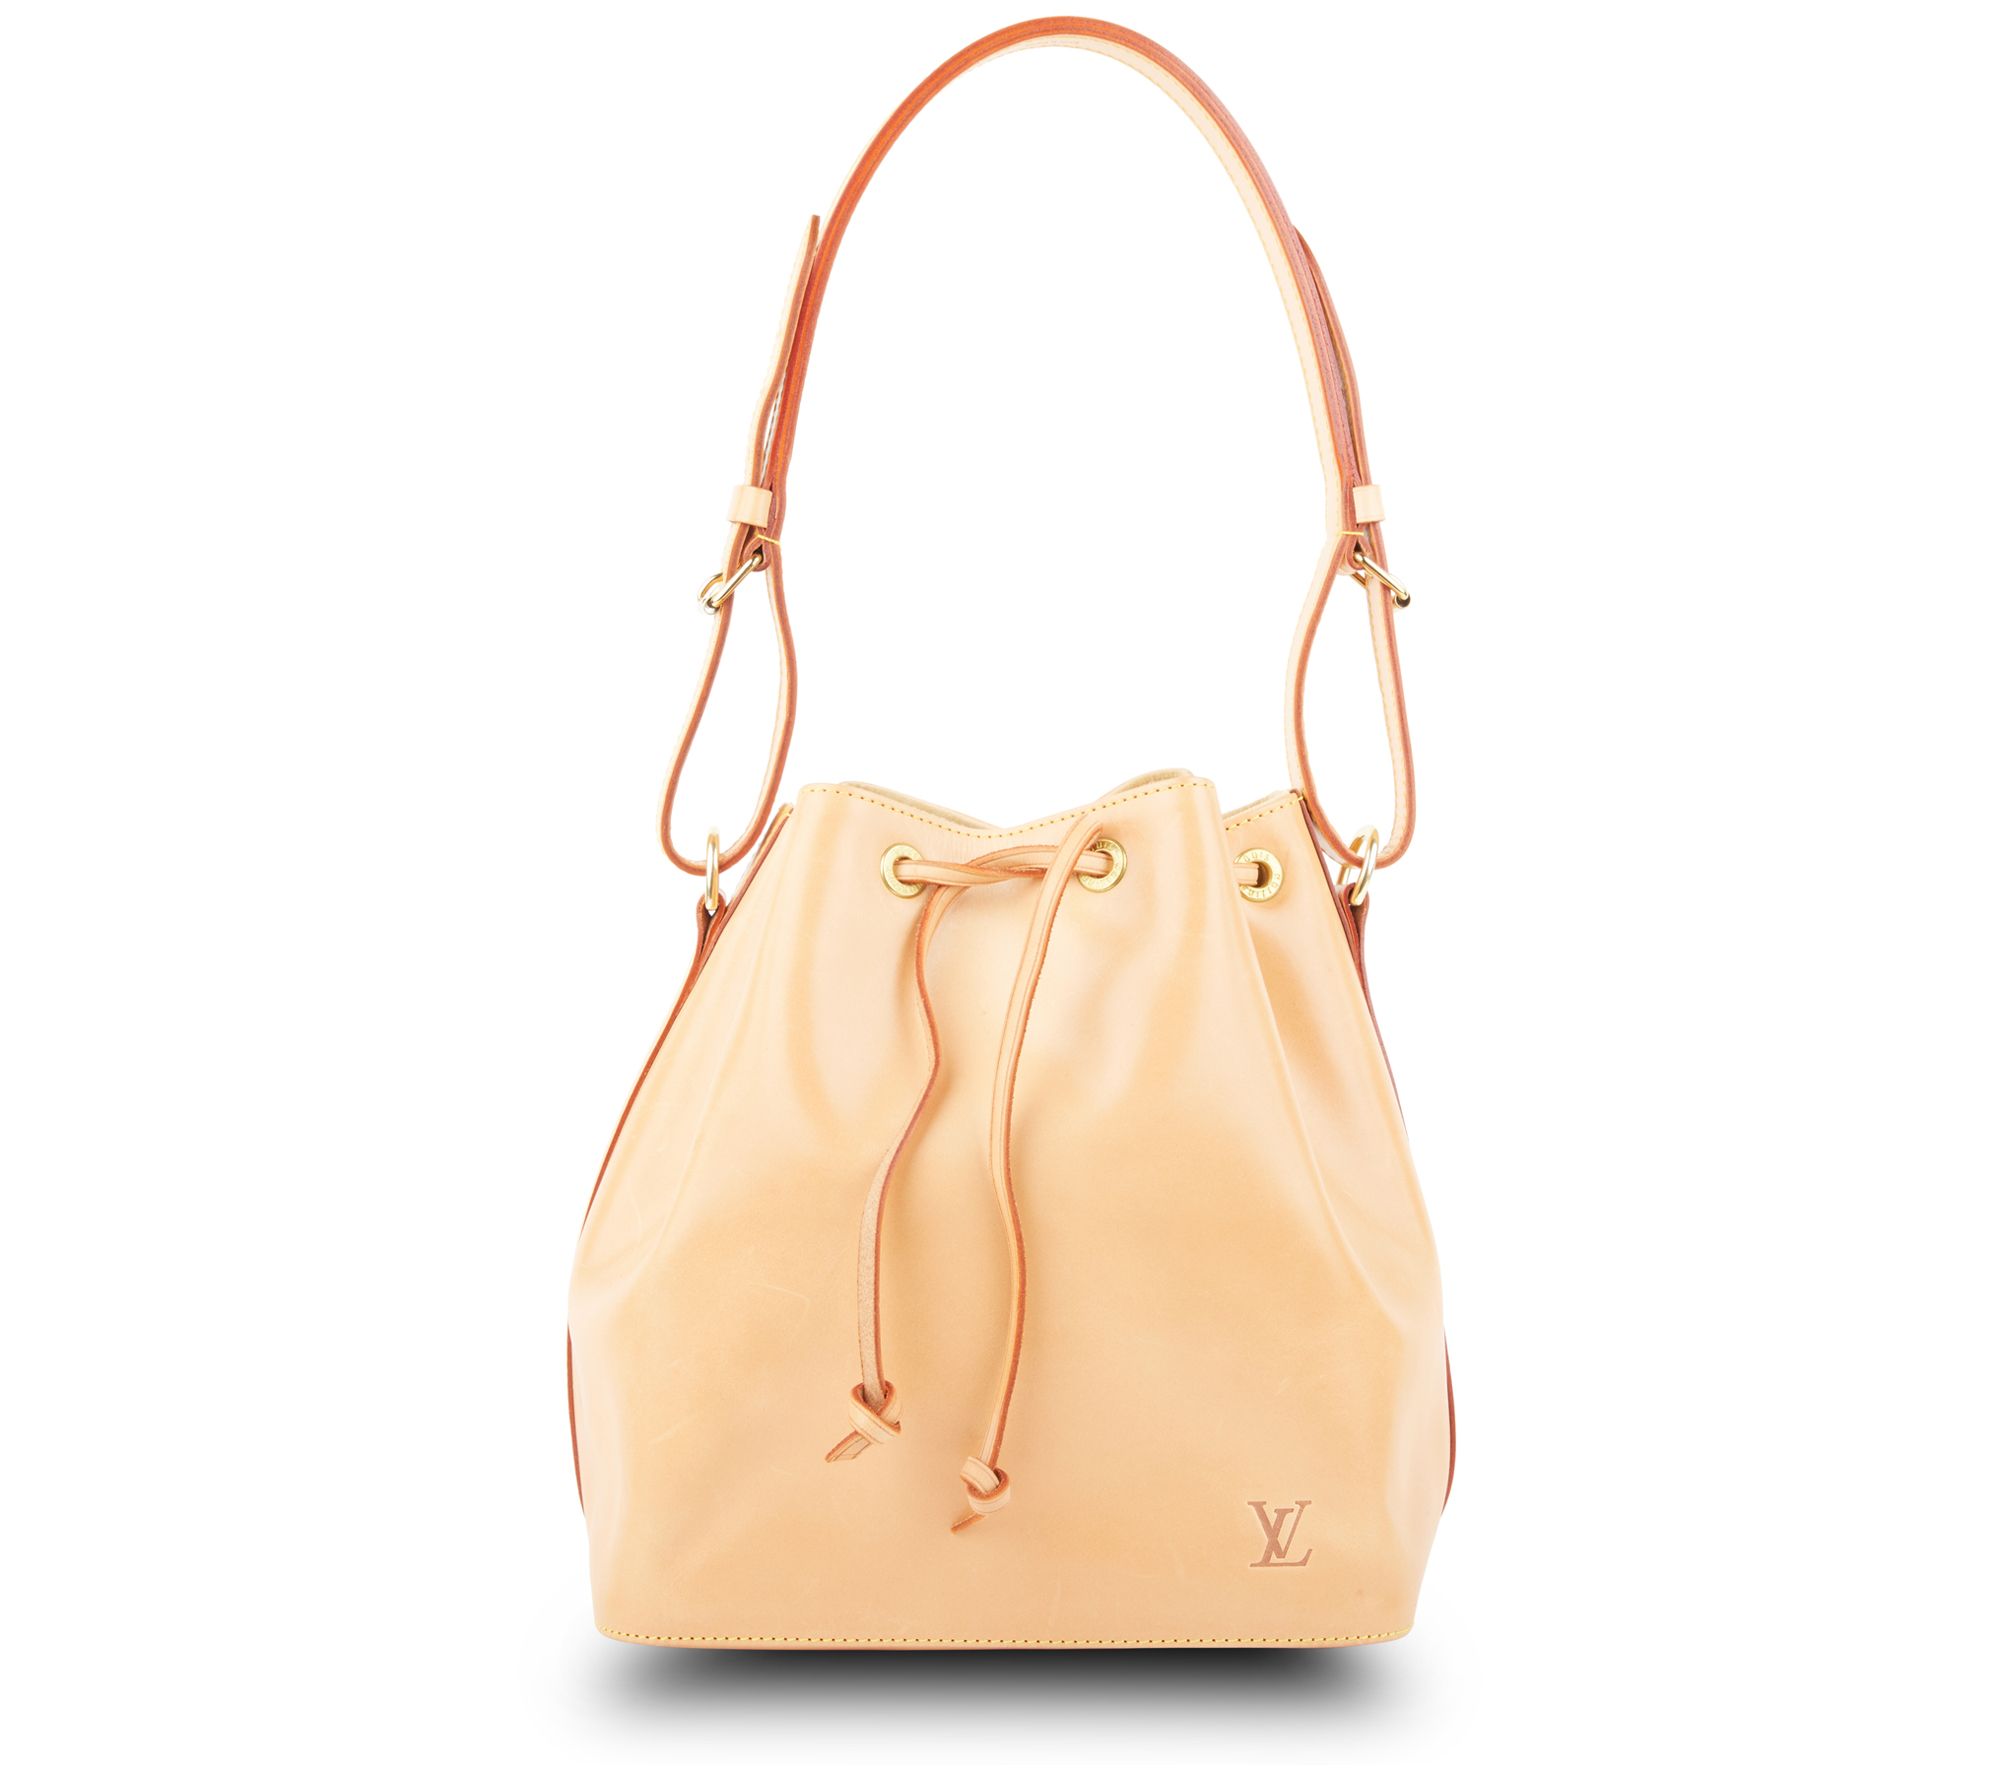 Louis Vuitton Noe luxury designer handbags - price guide and values